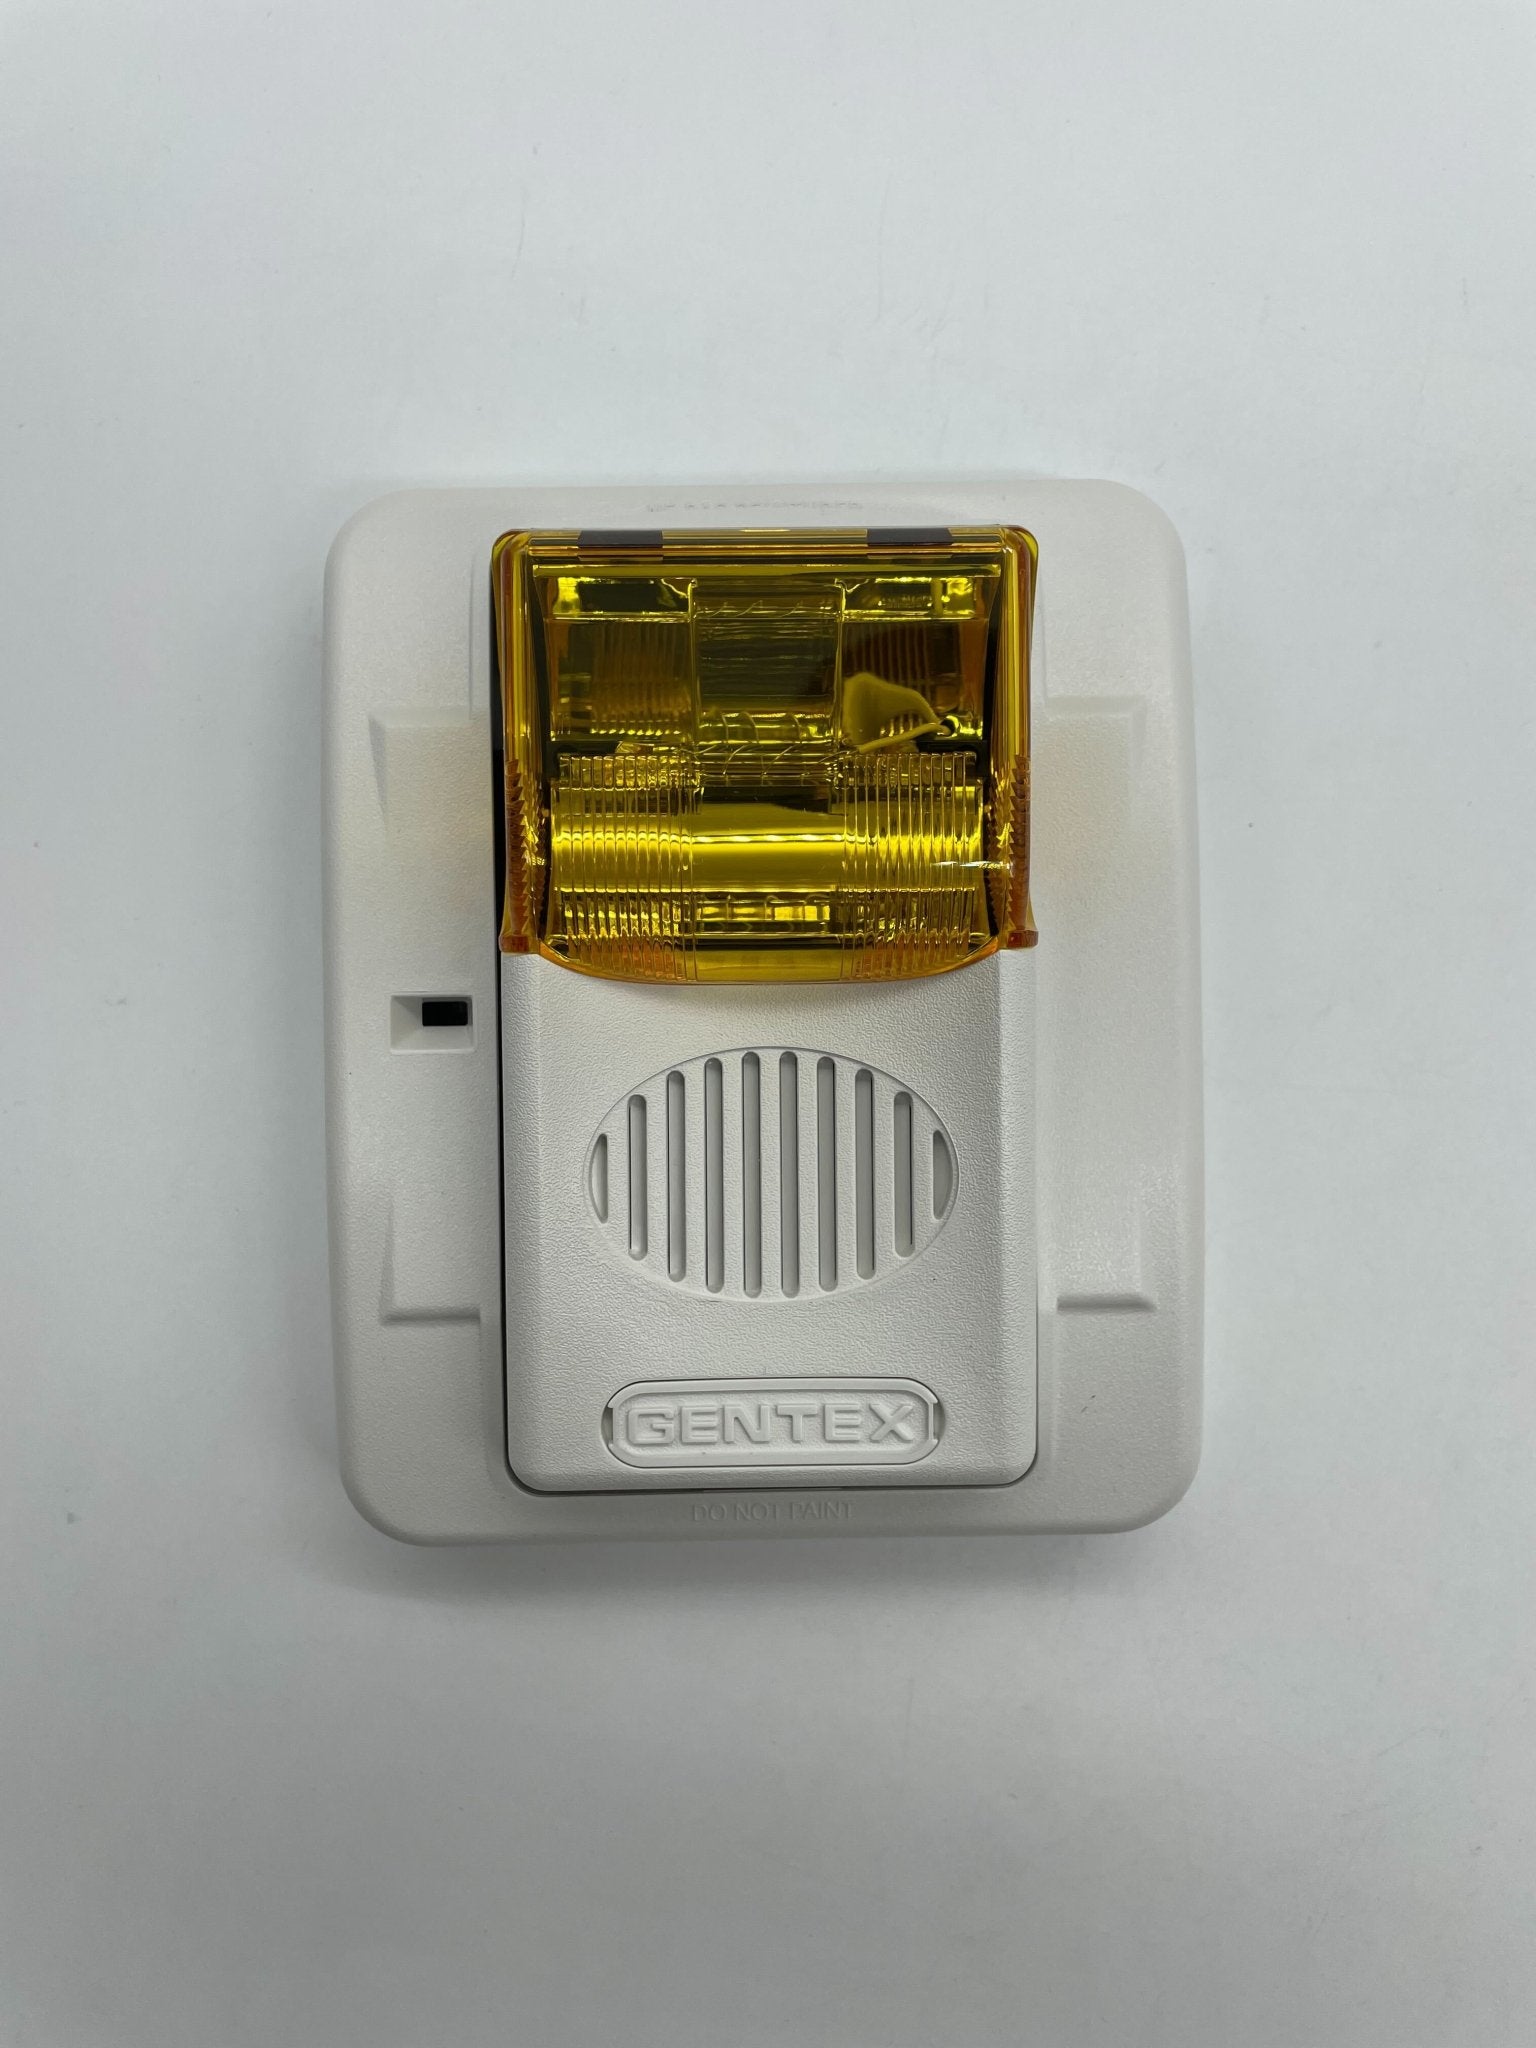 Gentex GECA24PWW - The Fire Alarm Supplier